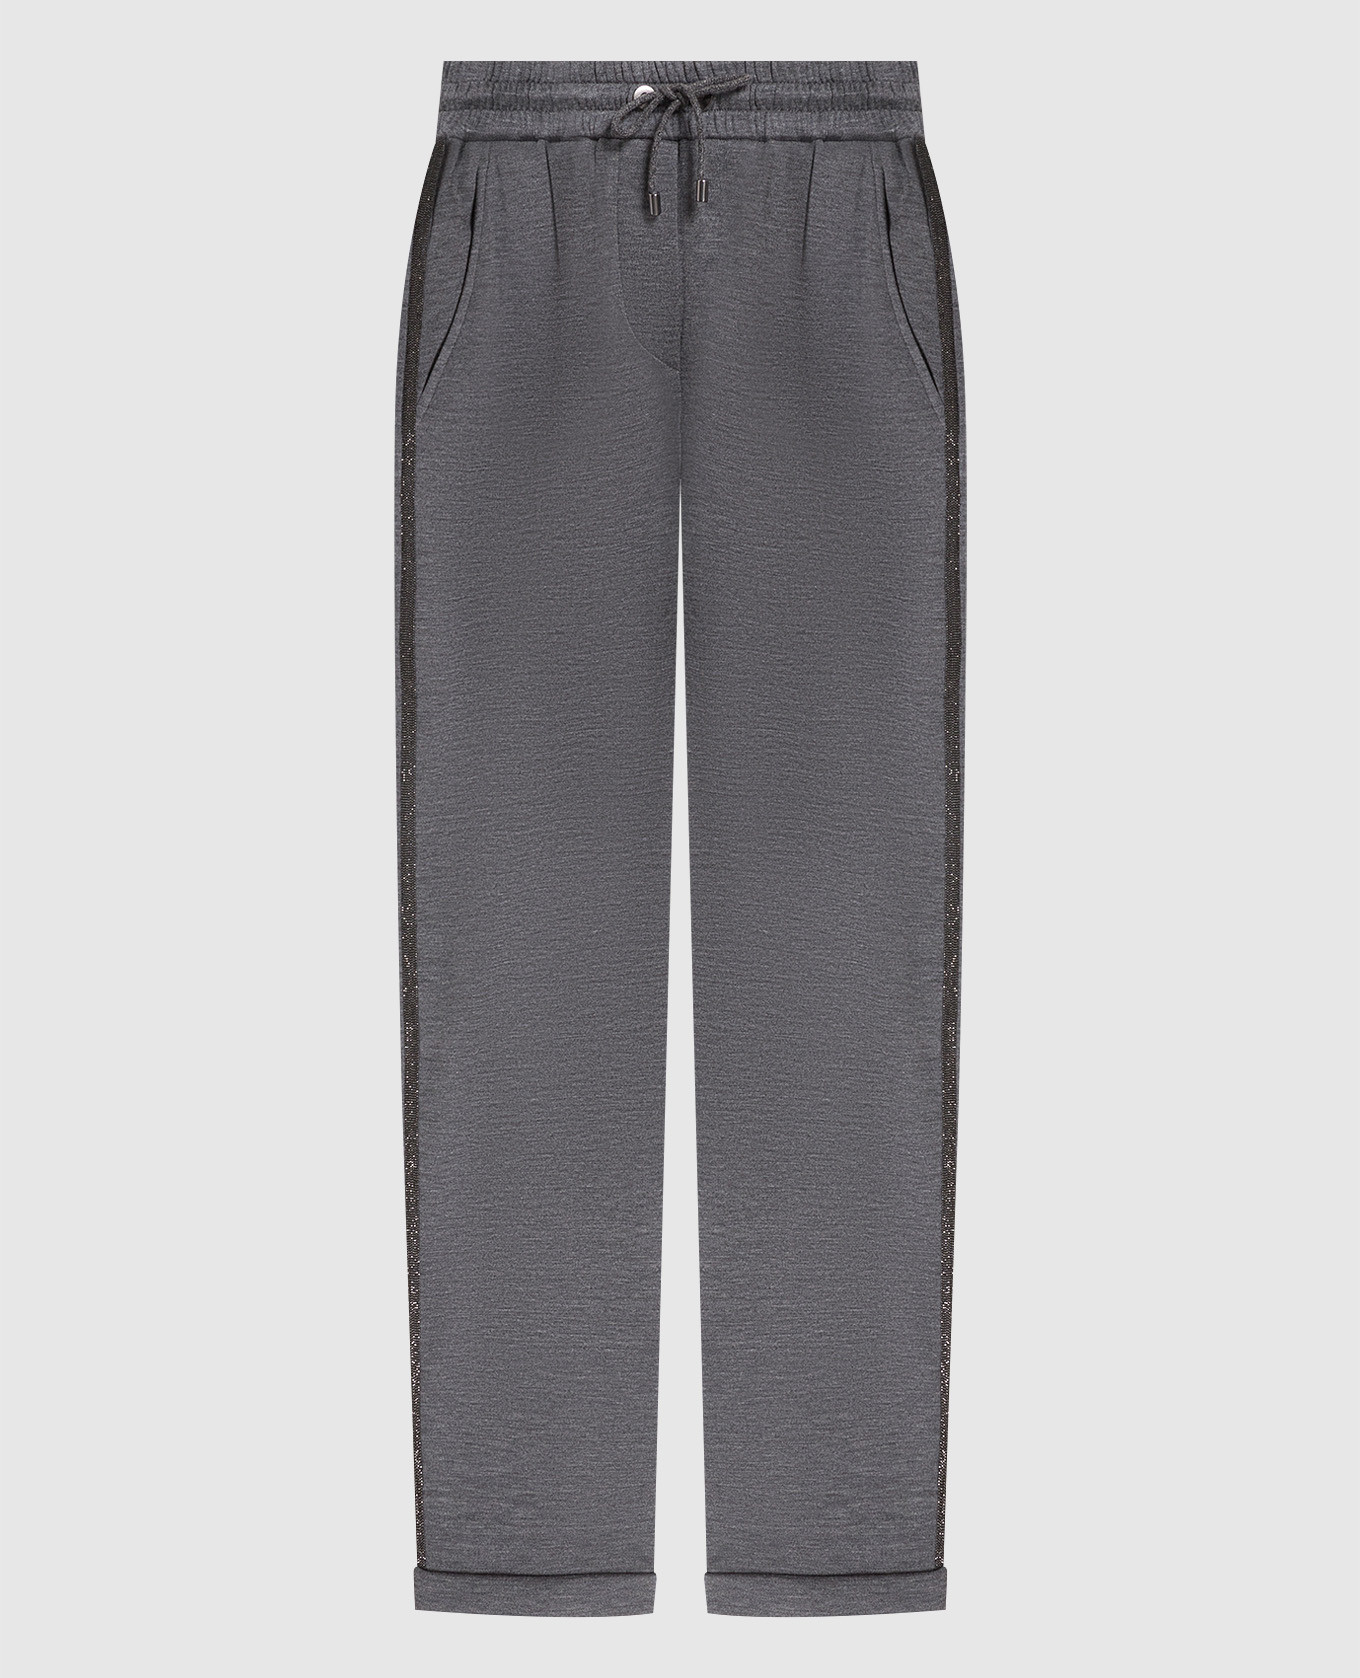 Gray sweatpants with monil chain